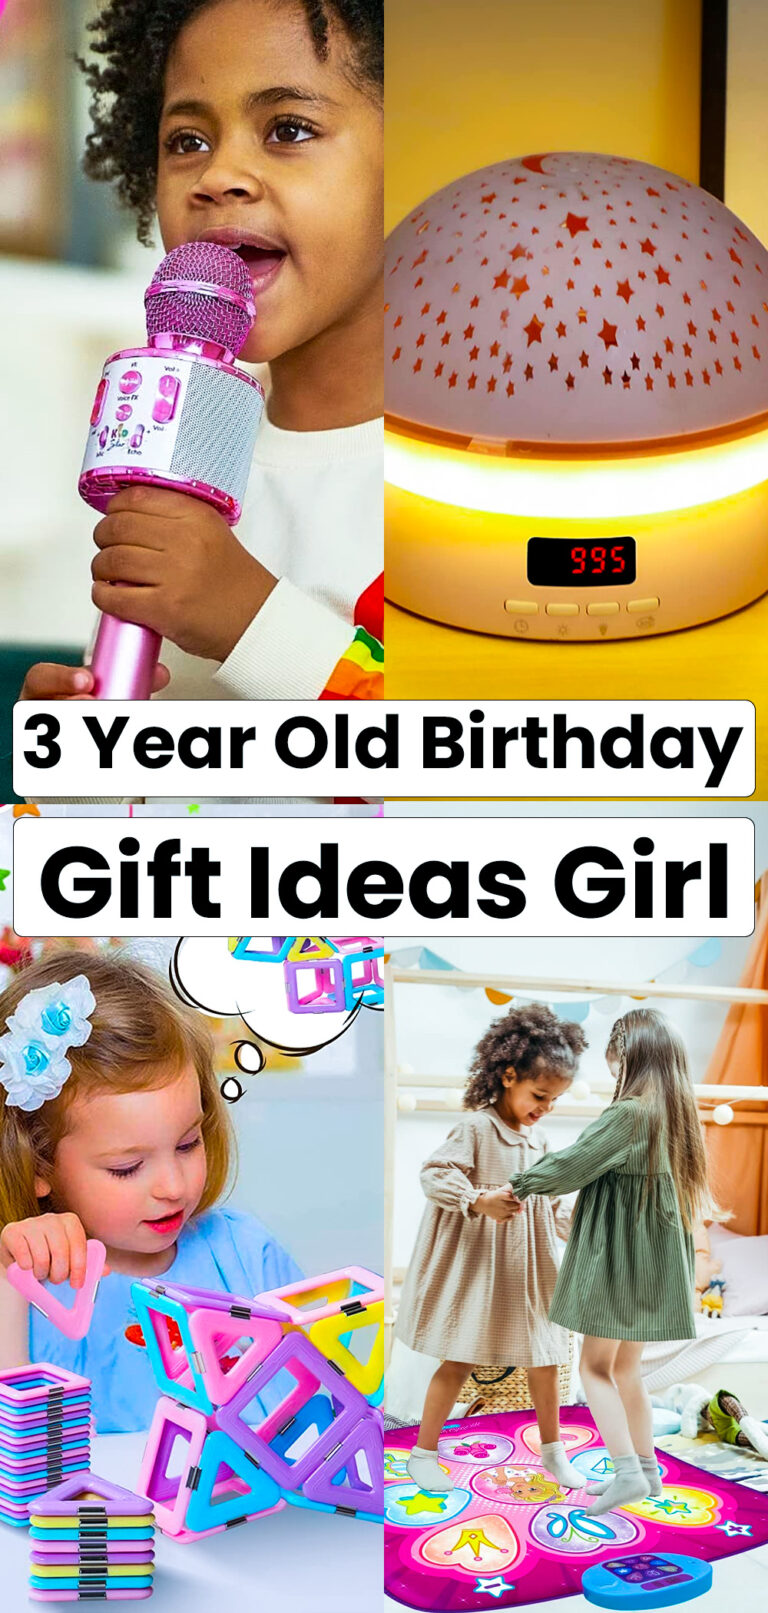 3 Year Old Birthday Gift Ideas Girl